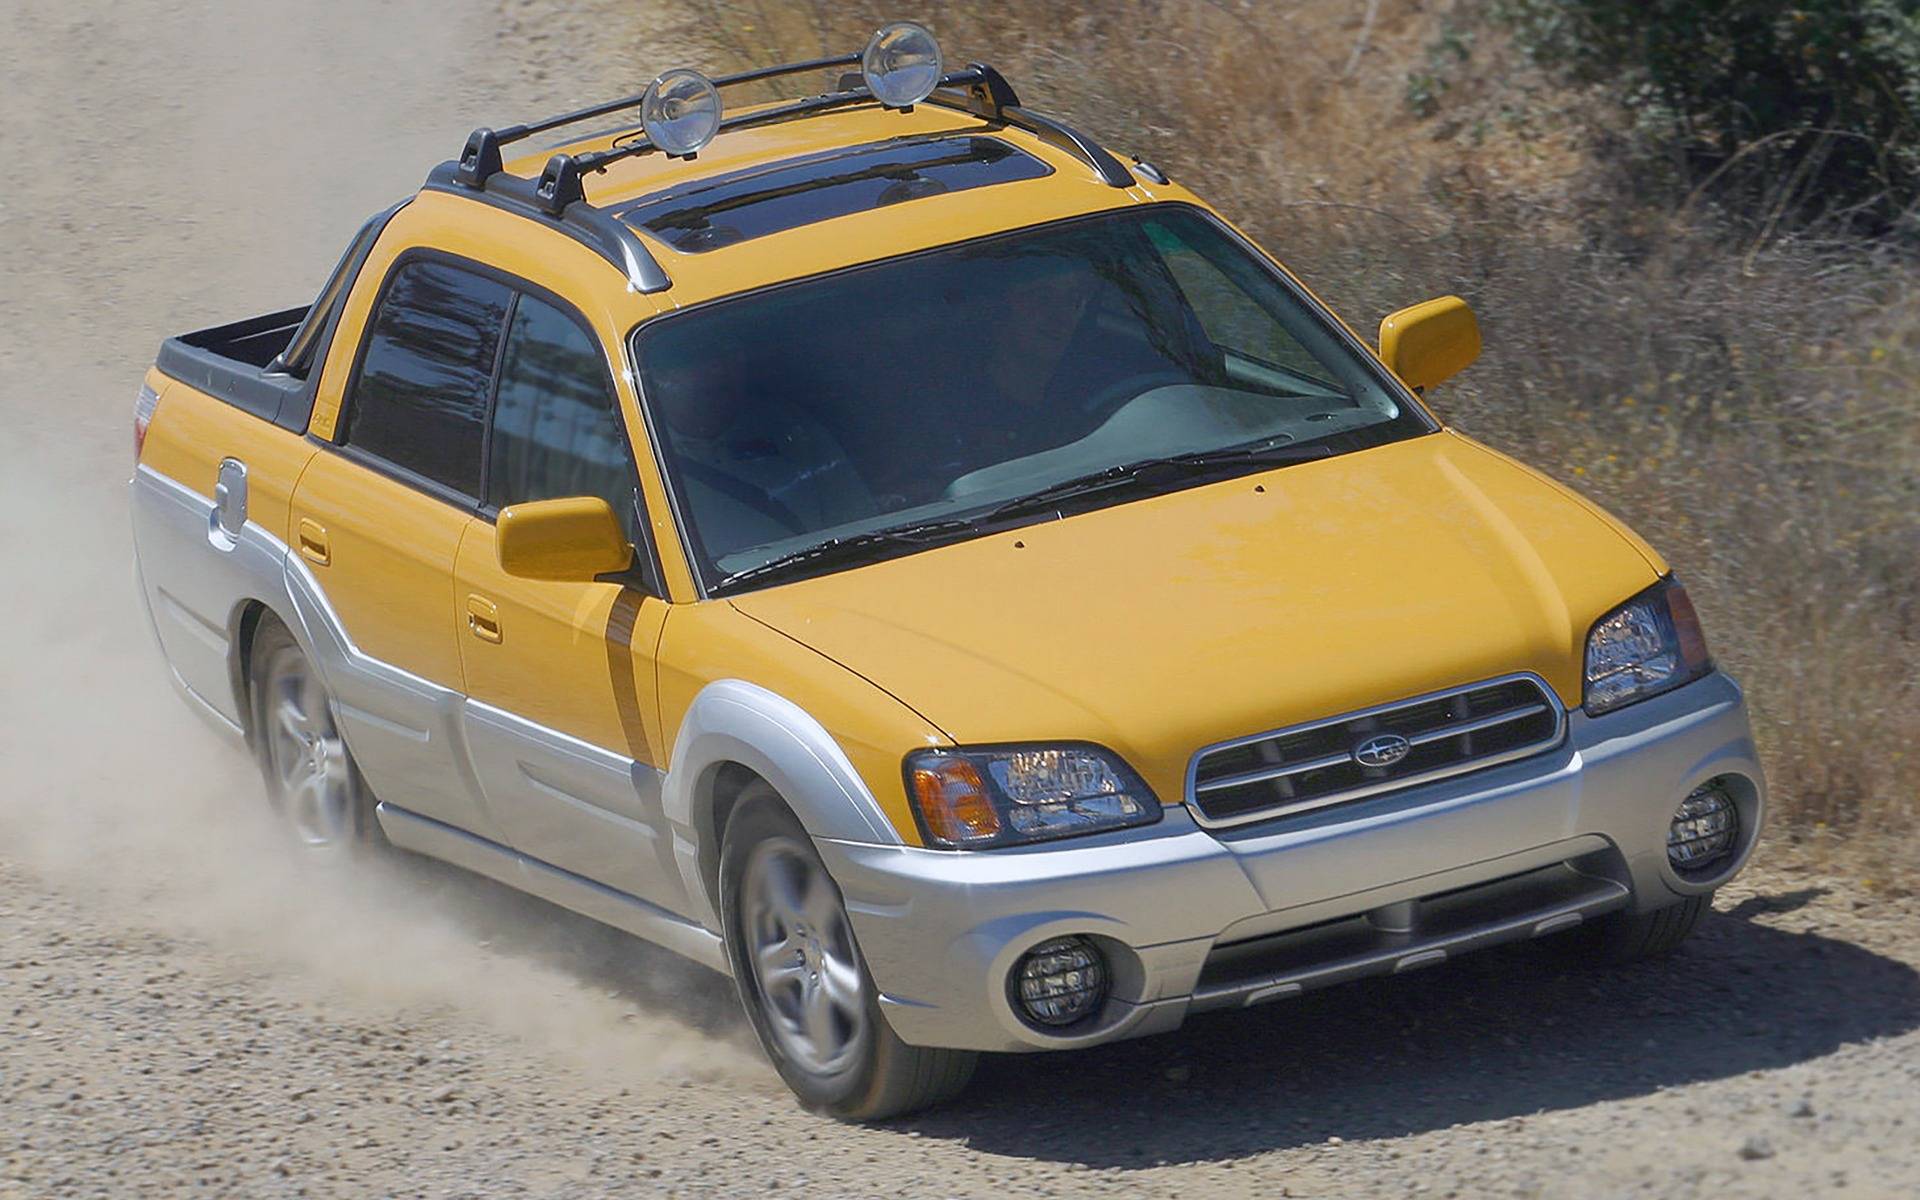 Subaru Baja camion giallo guida su strada sterrata